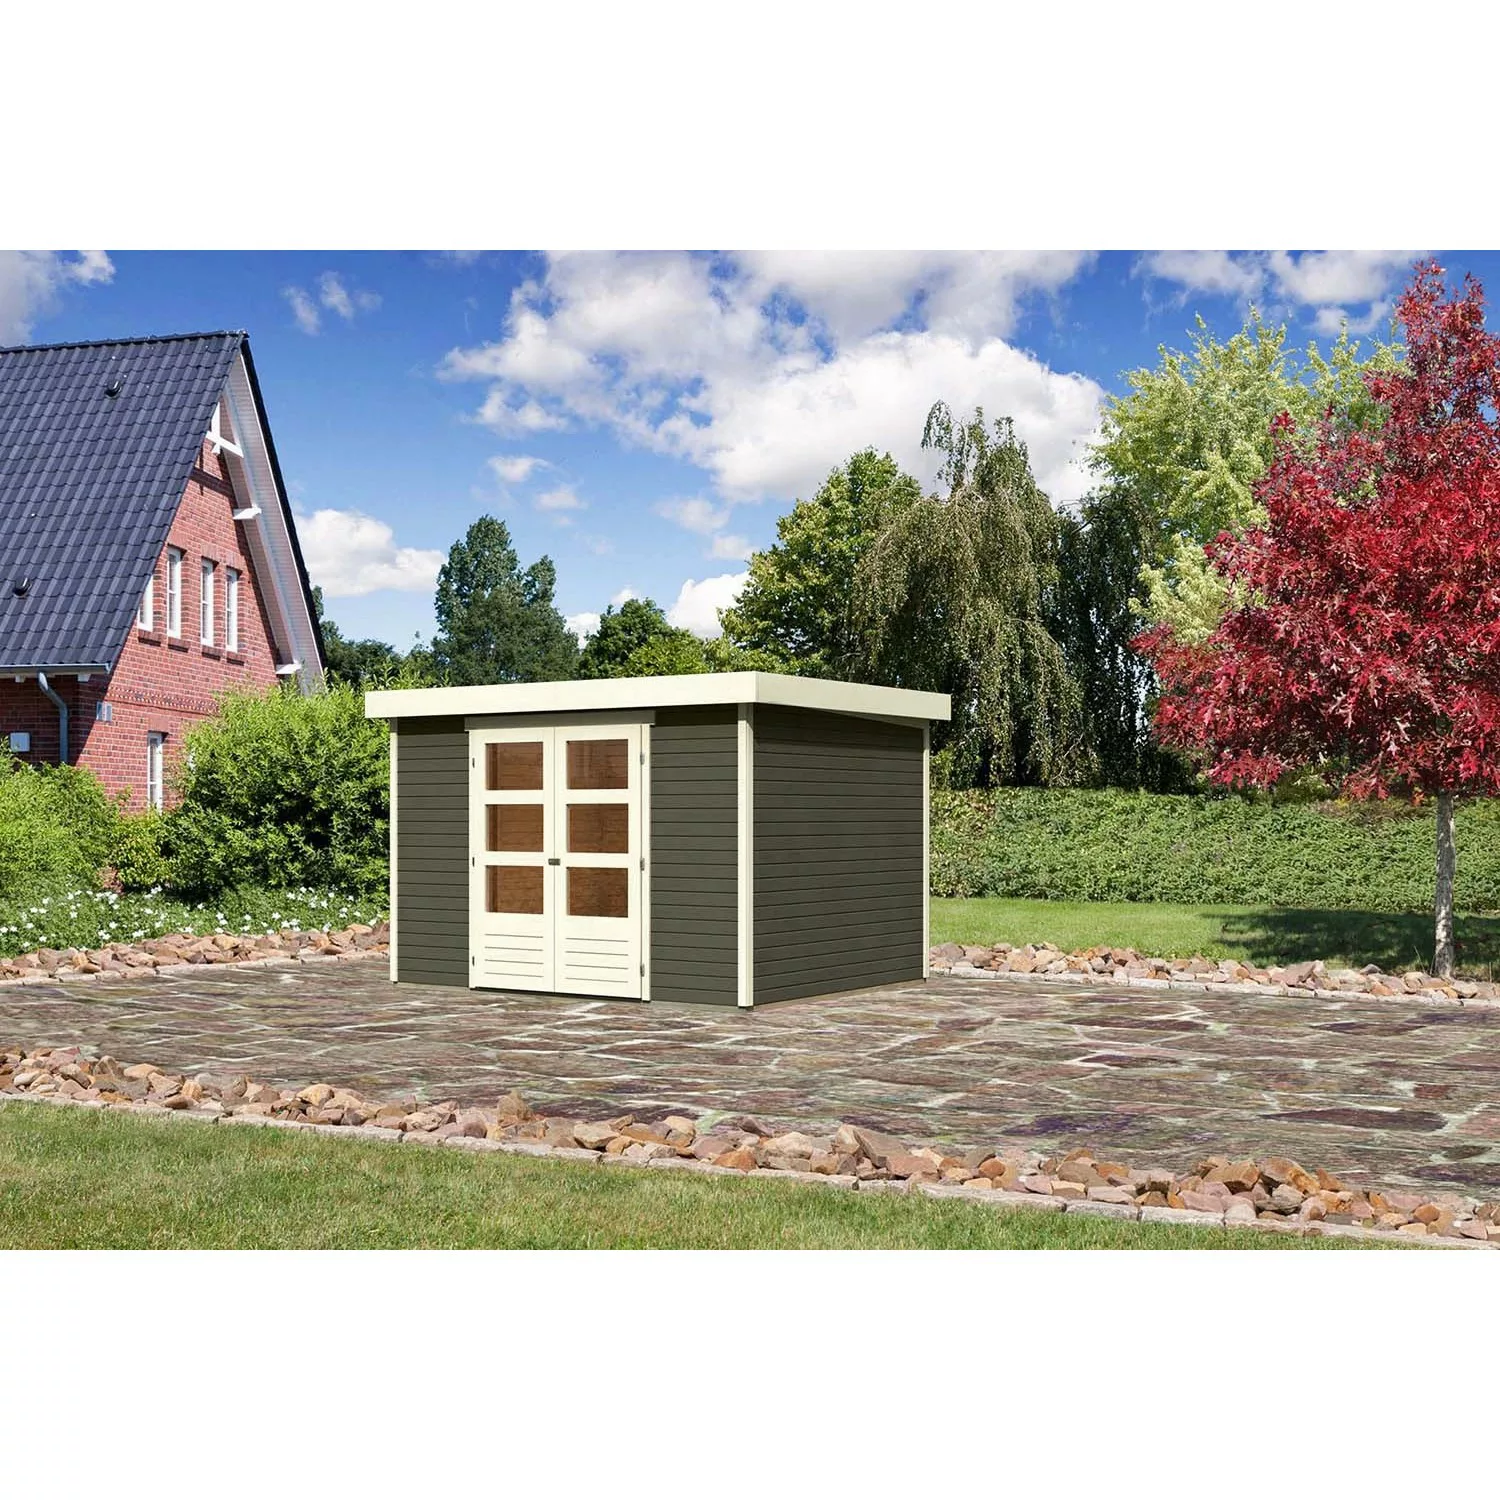 Karibu Holz-Gartenhaus Boras Terragrau Flachdach Lackiert 298 cm x 242 cm günstig online kaufen